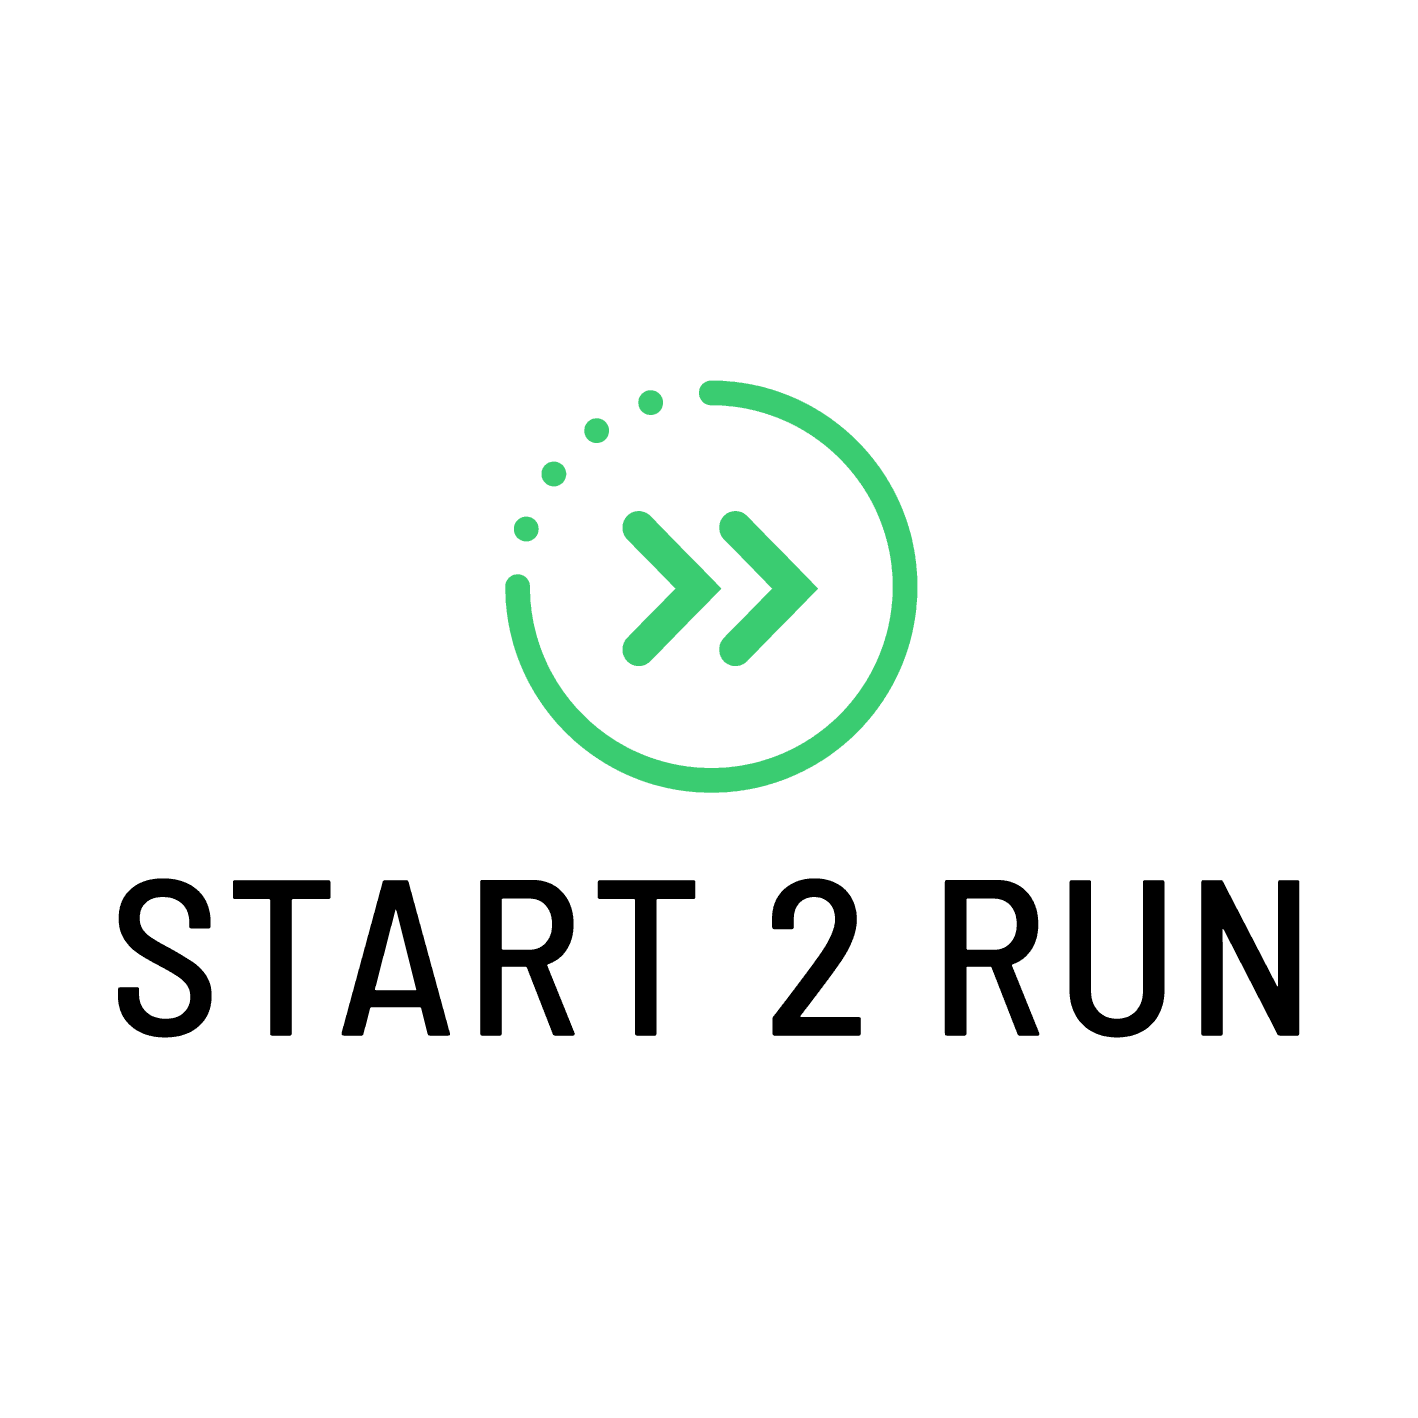 start-2-run-logo-text-color-black